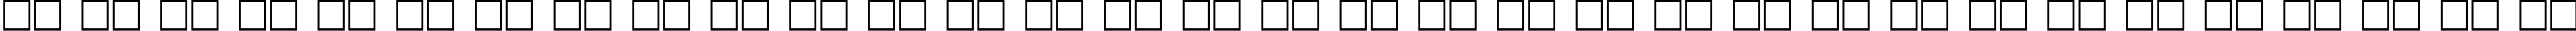 Пример написания русского алфавита шрифтом Geneva Plain:001.00180n